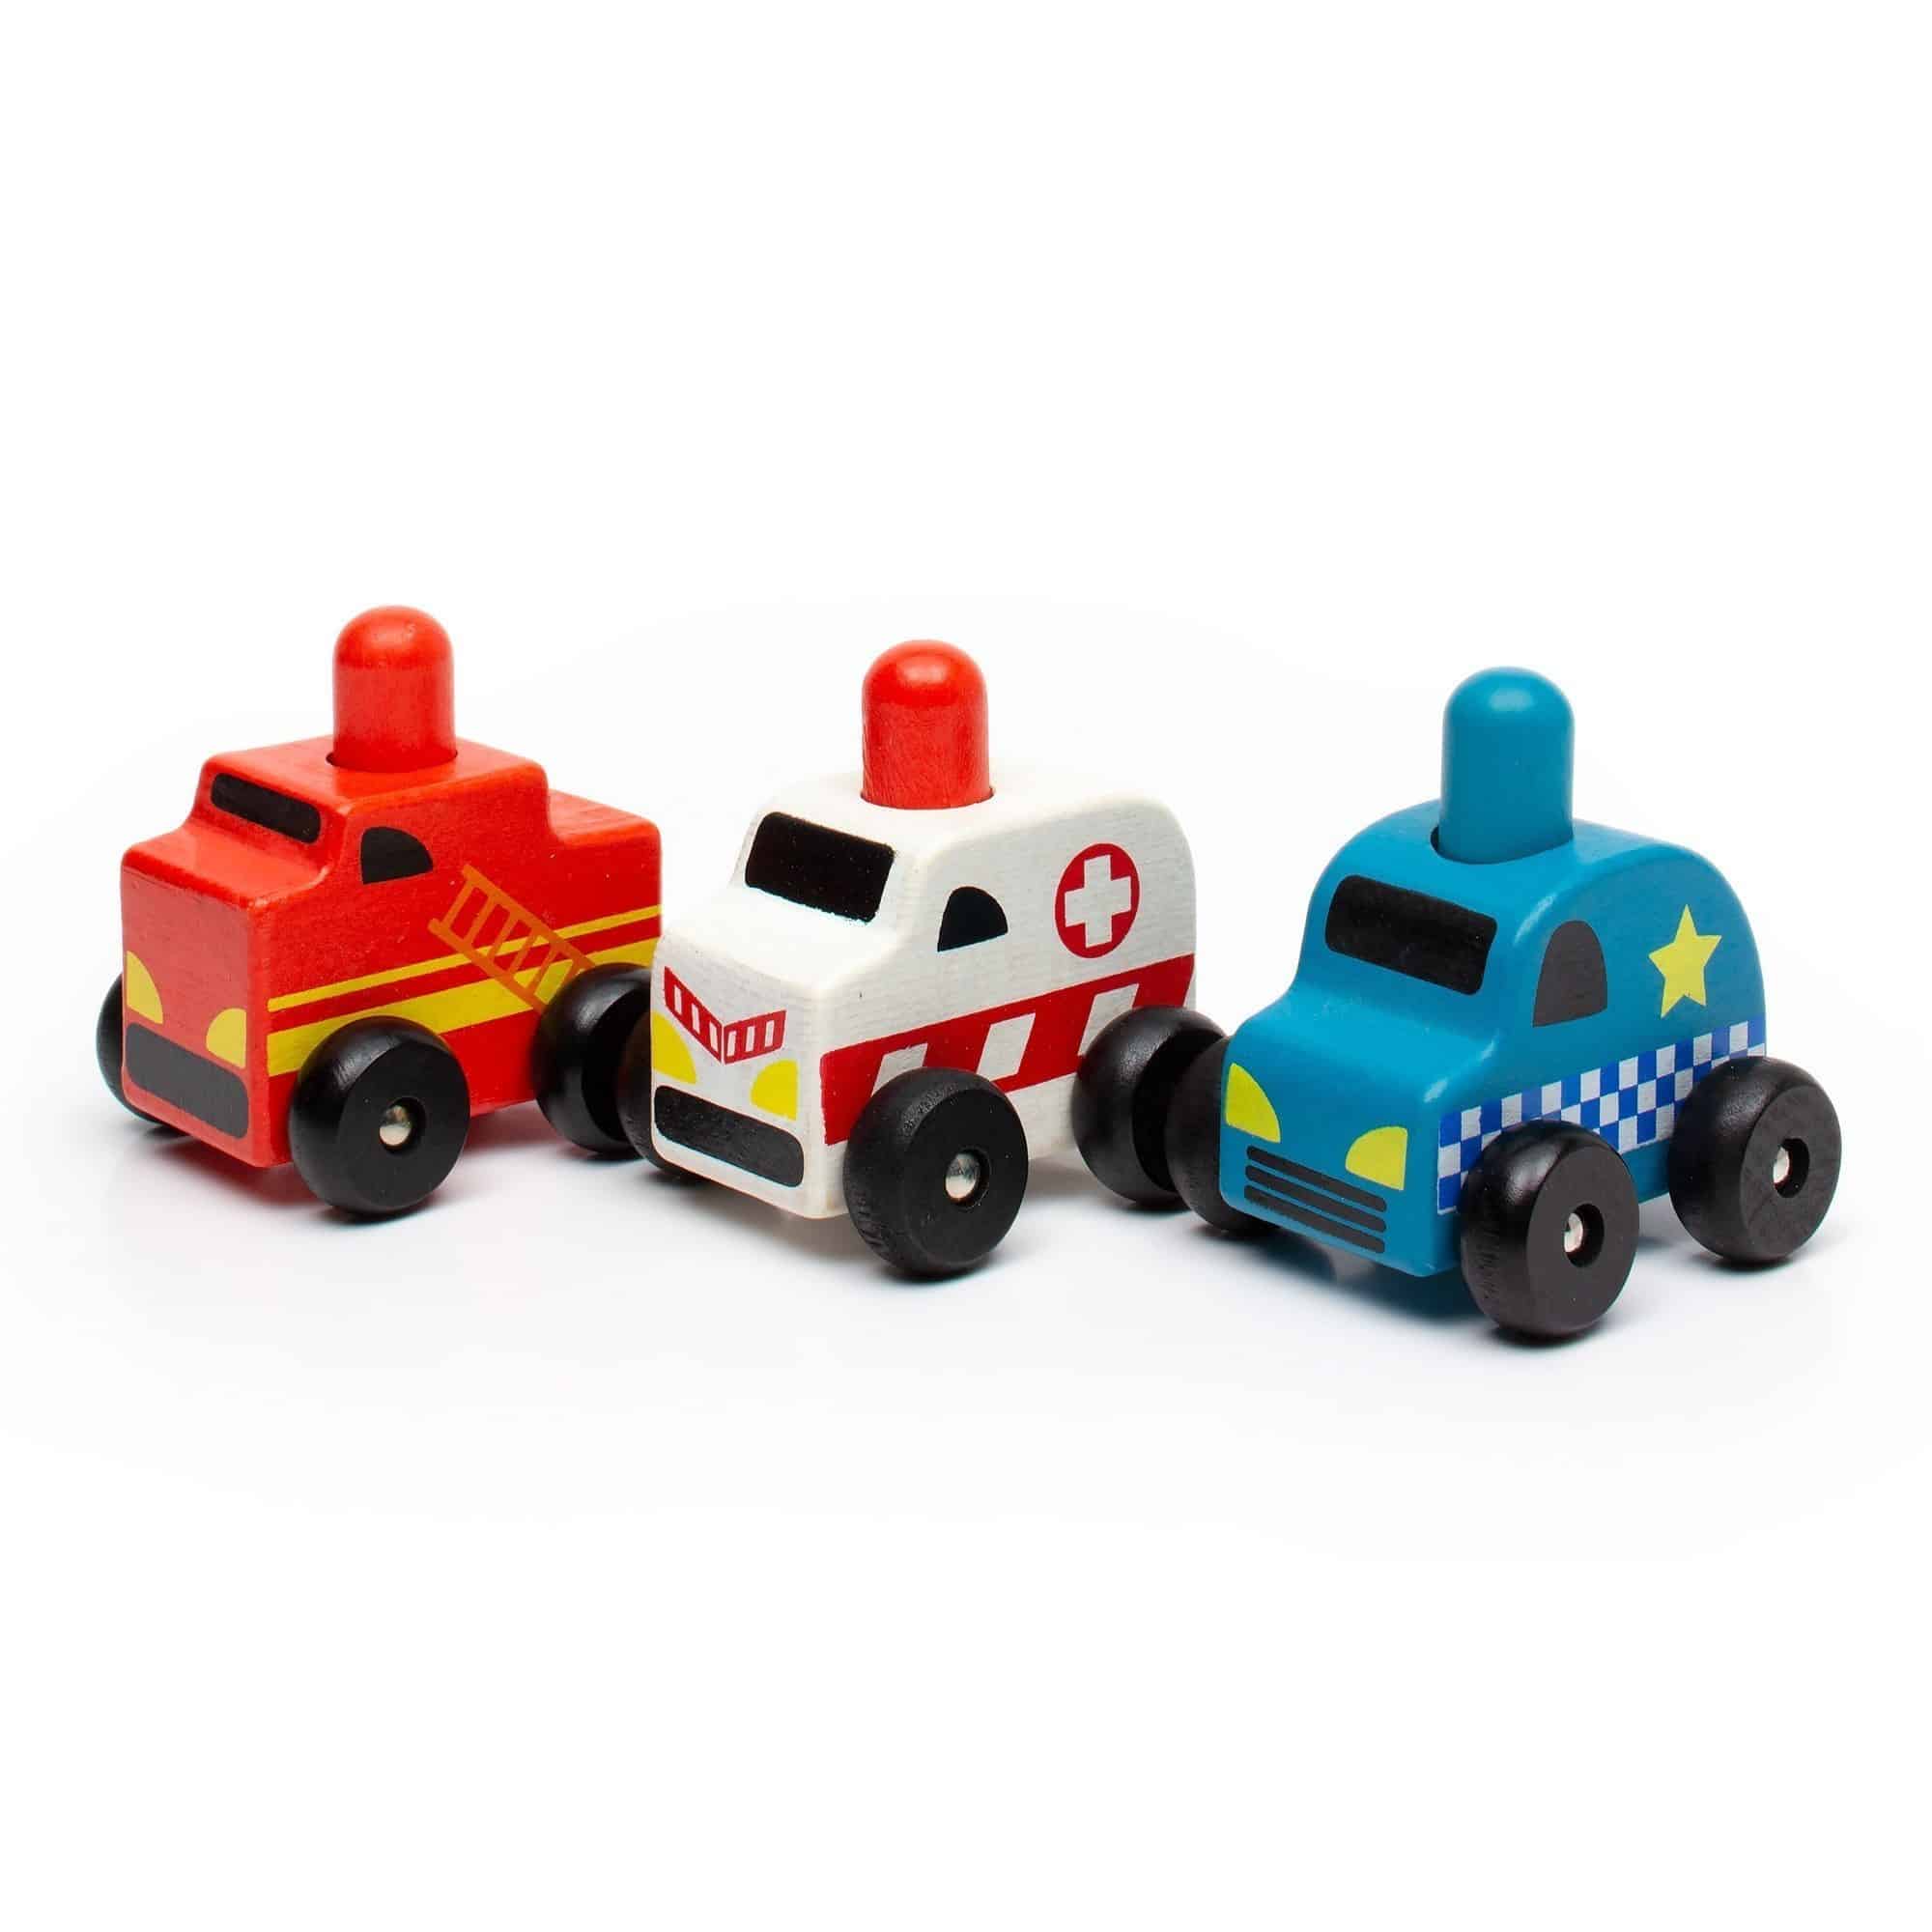 Discoveroo - Squeaker Emergency Car Set